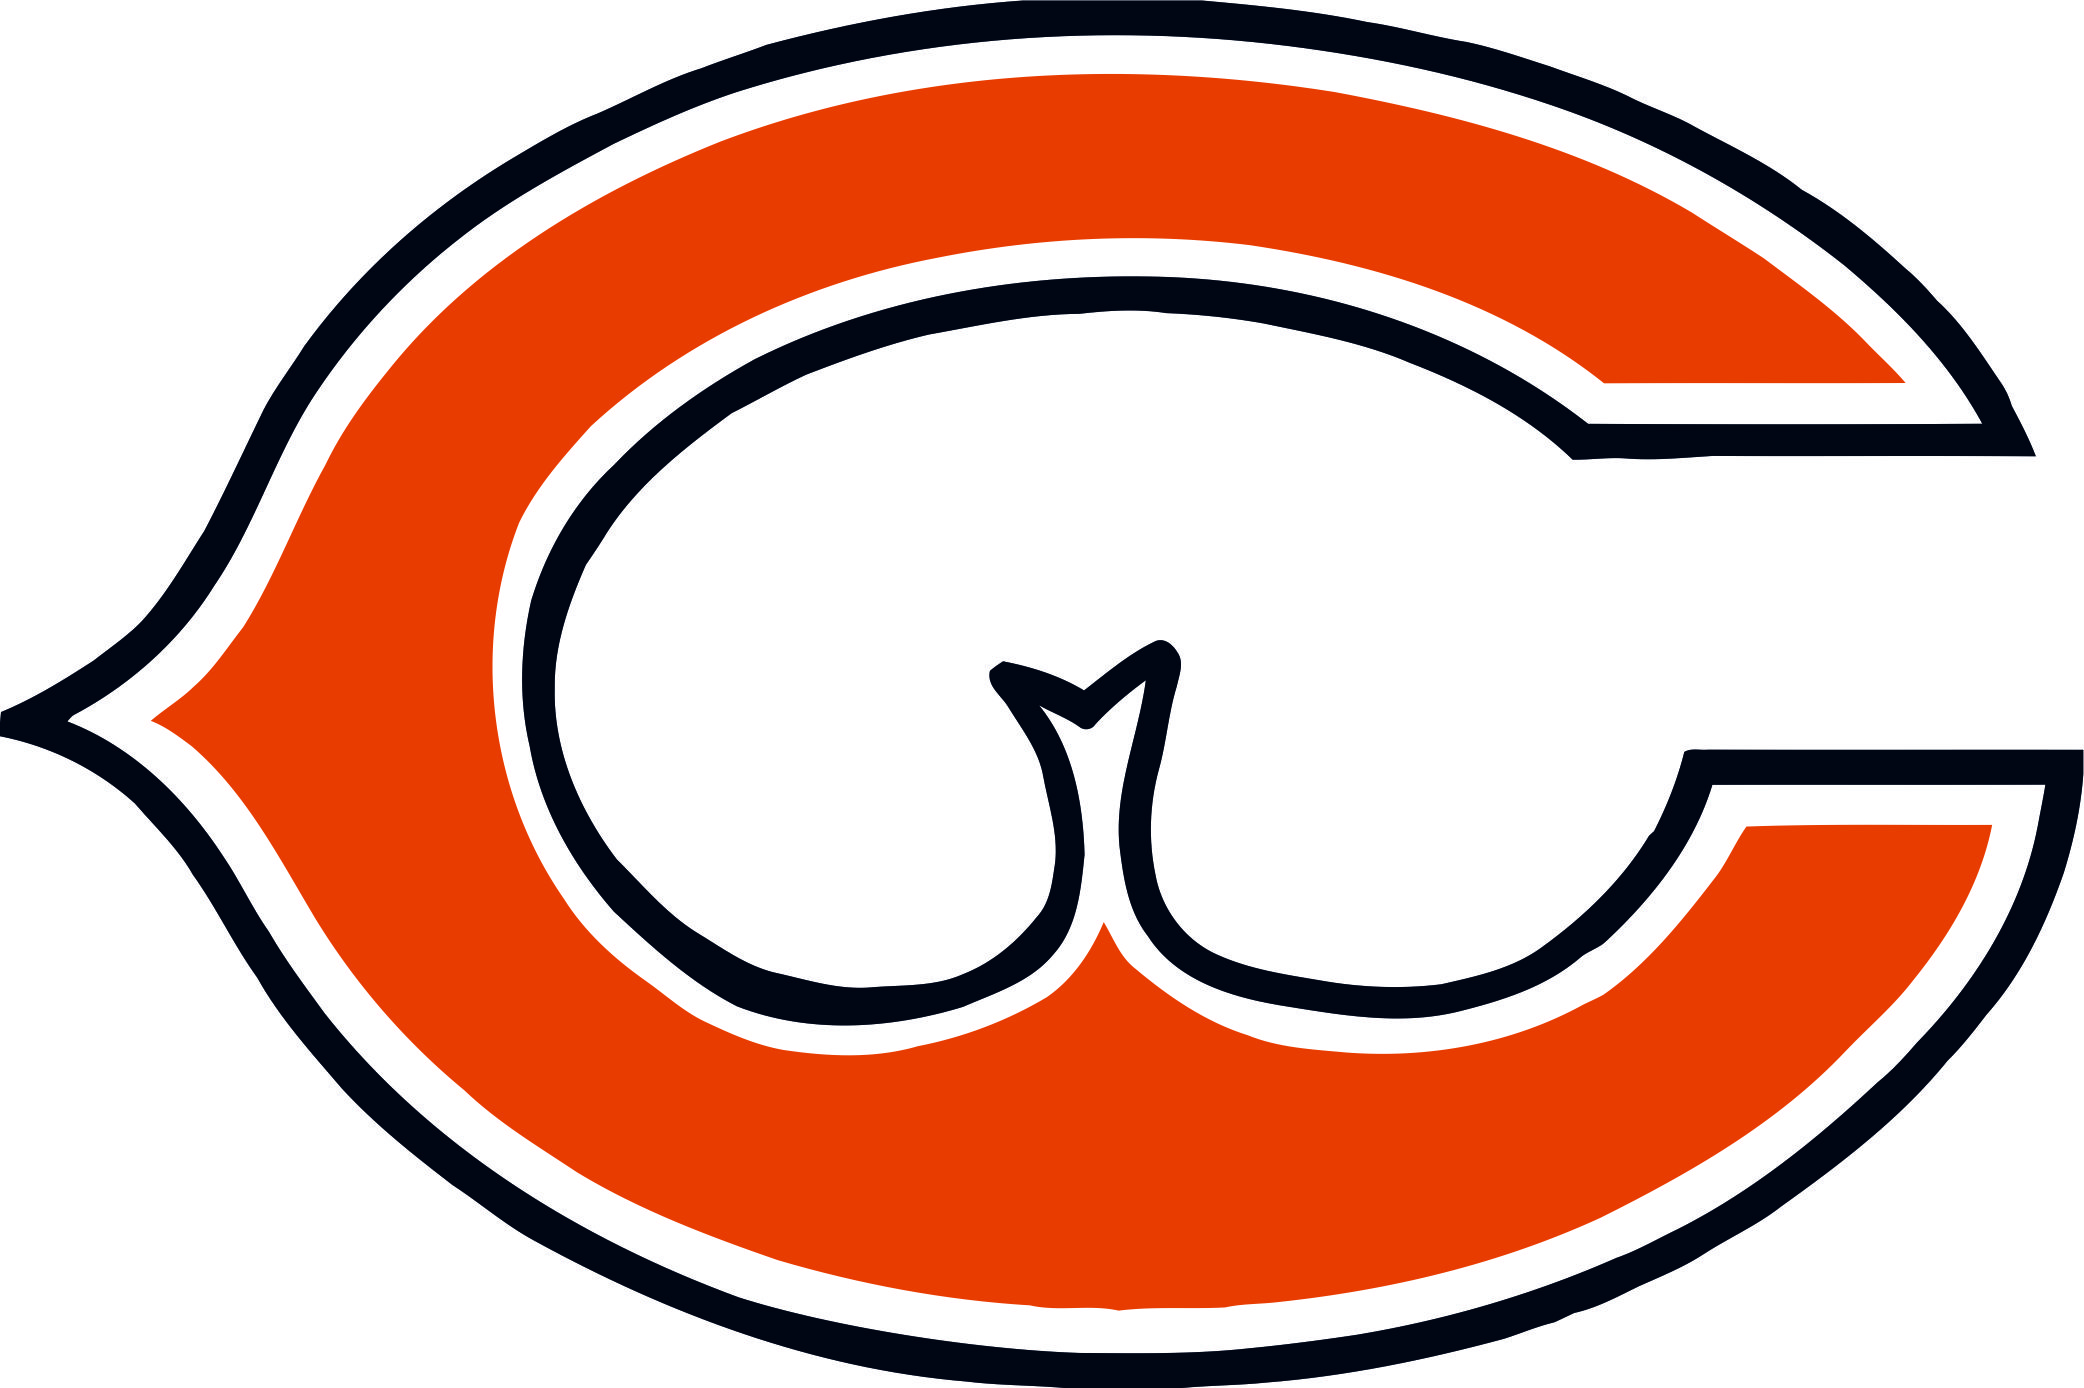 Chicago Bears Butts Logo fabric transfer